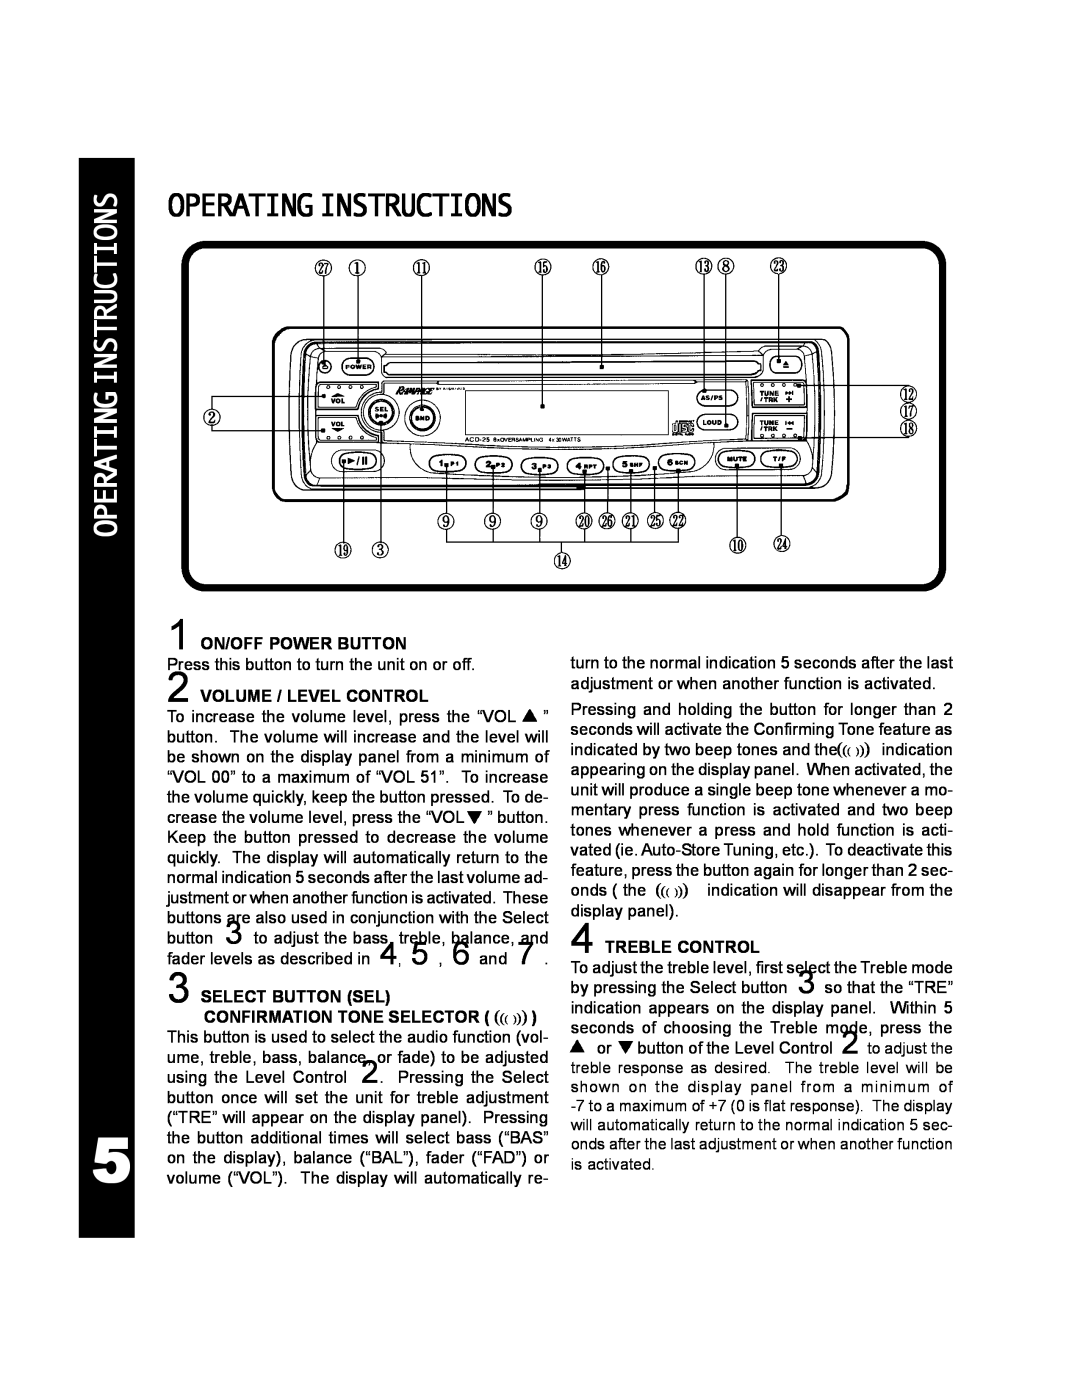 Audiovox ACD-25 manual Operatinginstructions 